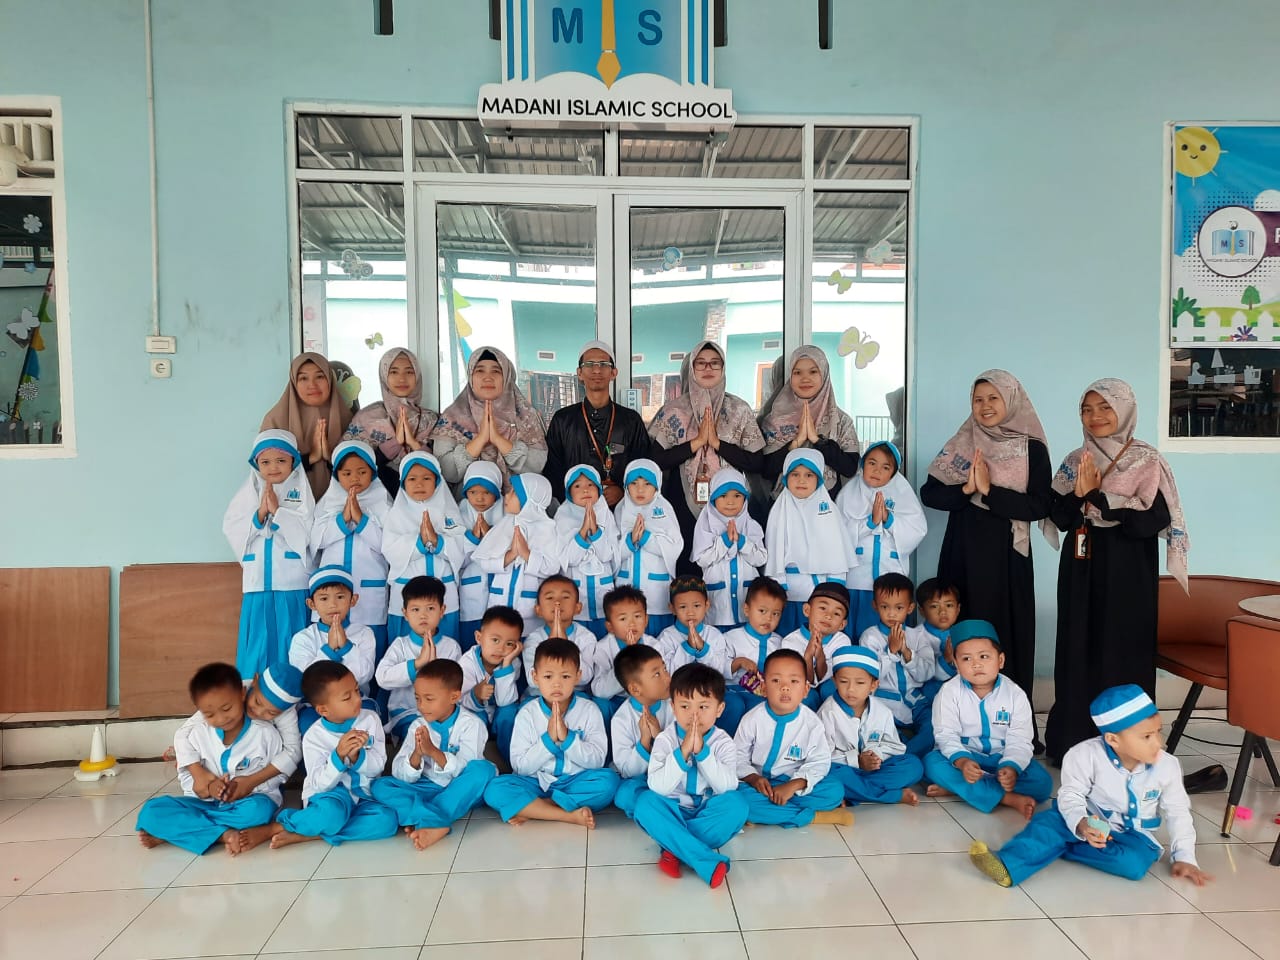 PAUD Madani Islamic School Miliki Sembilan Program Belajar Unggulan